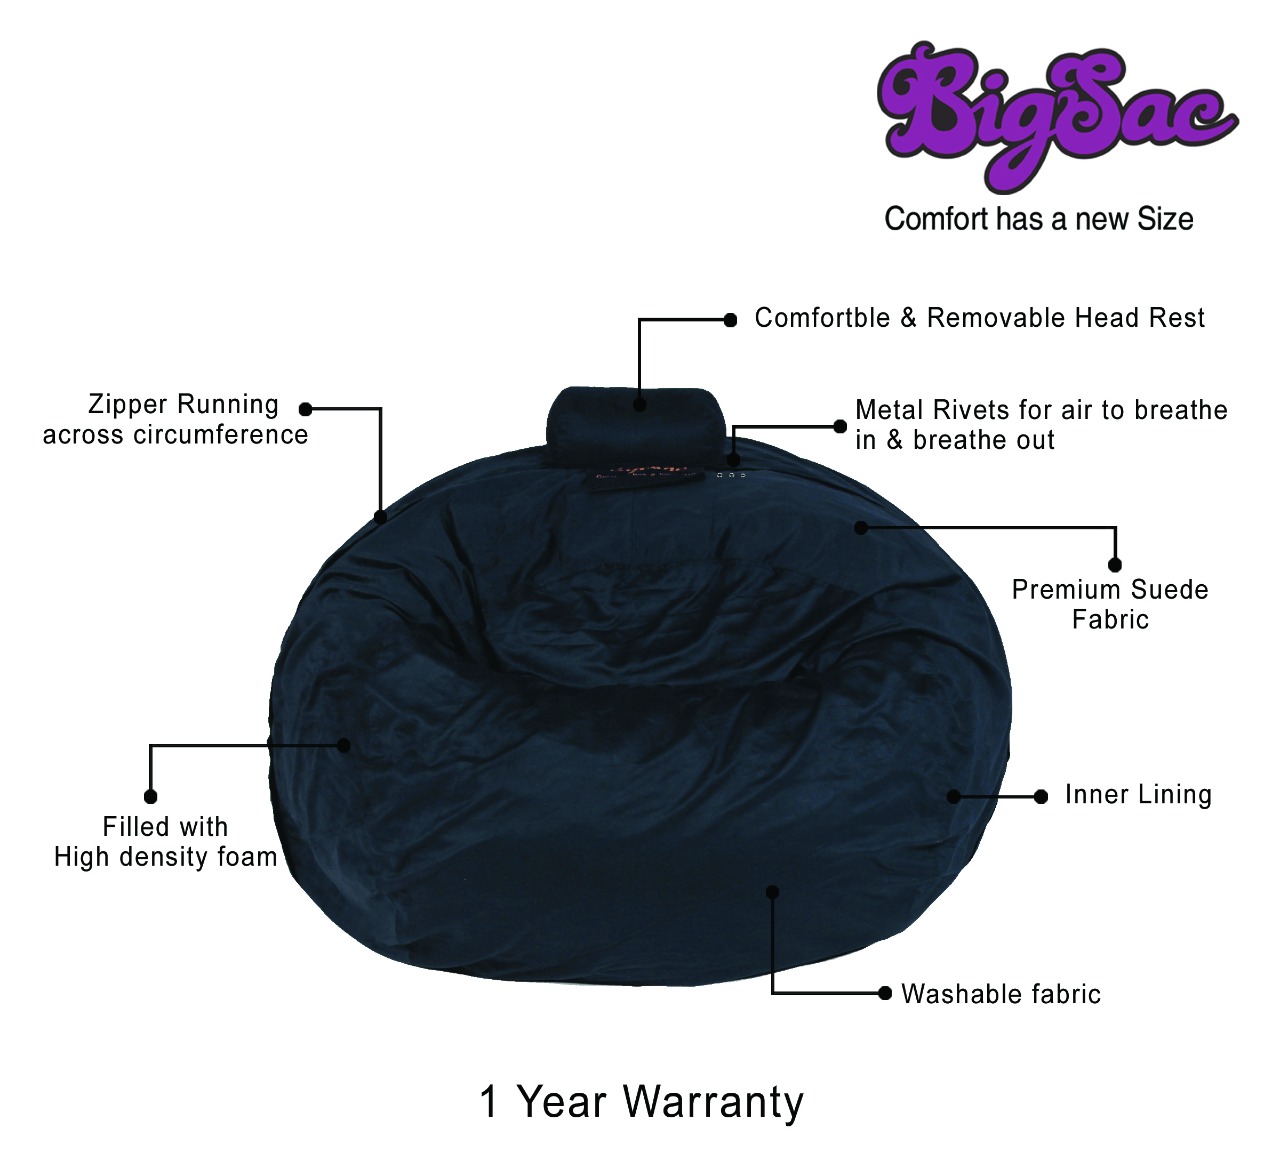 Big Sac 3.5 Feet Love Sac Premium Suede Fabric Filled Black Color - 5 Years Warranty        